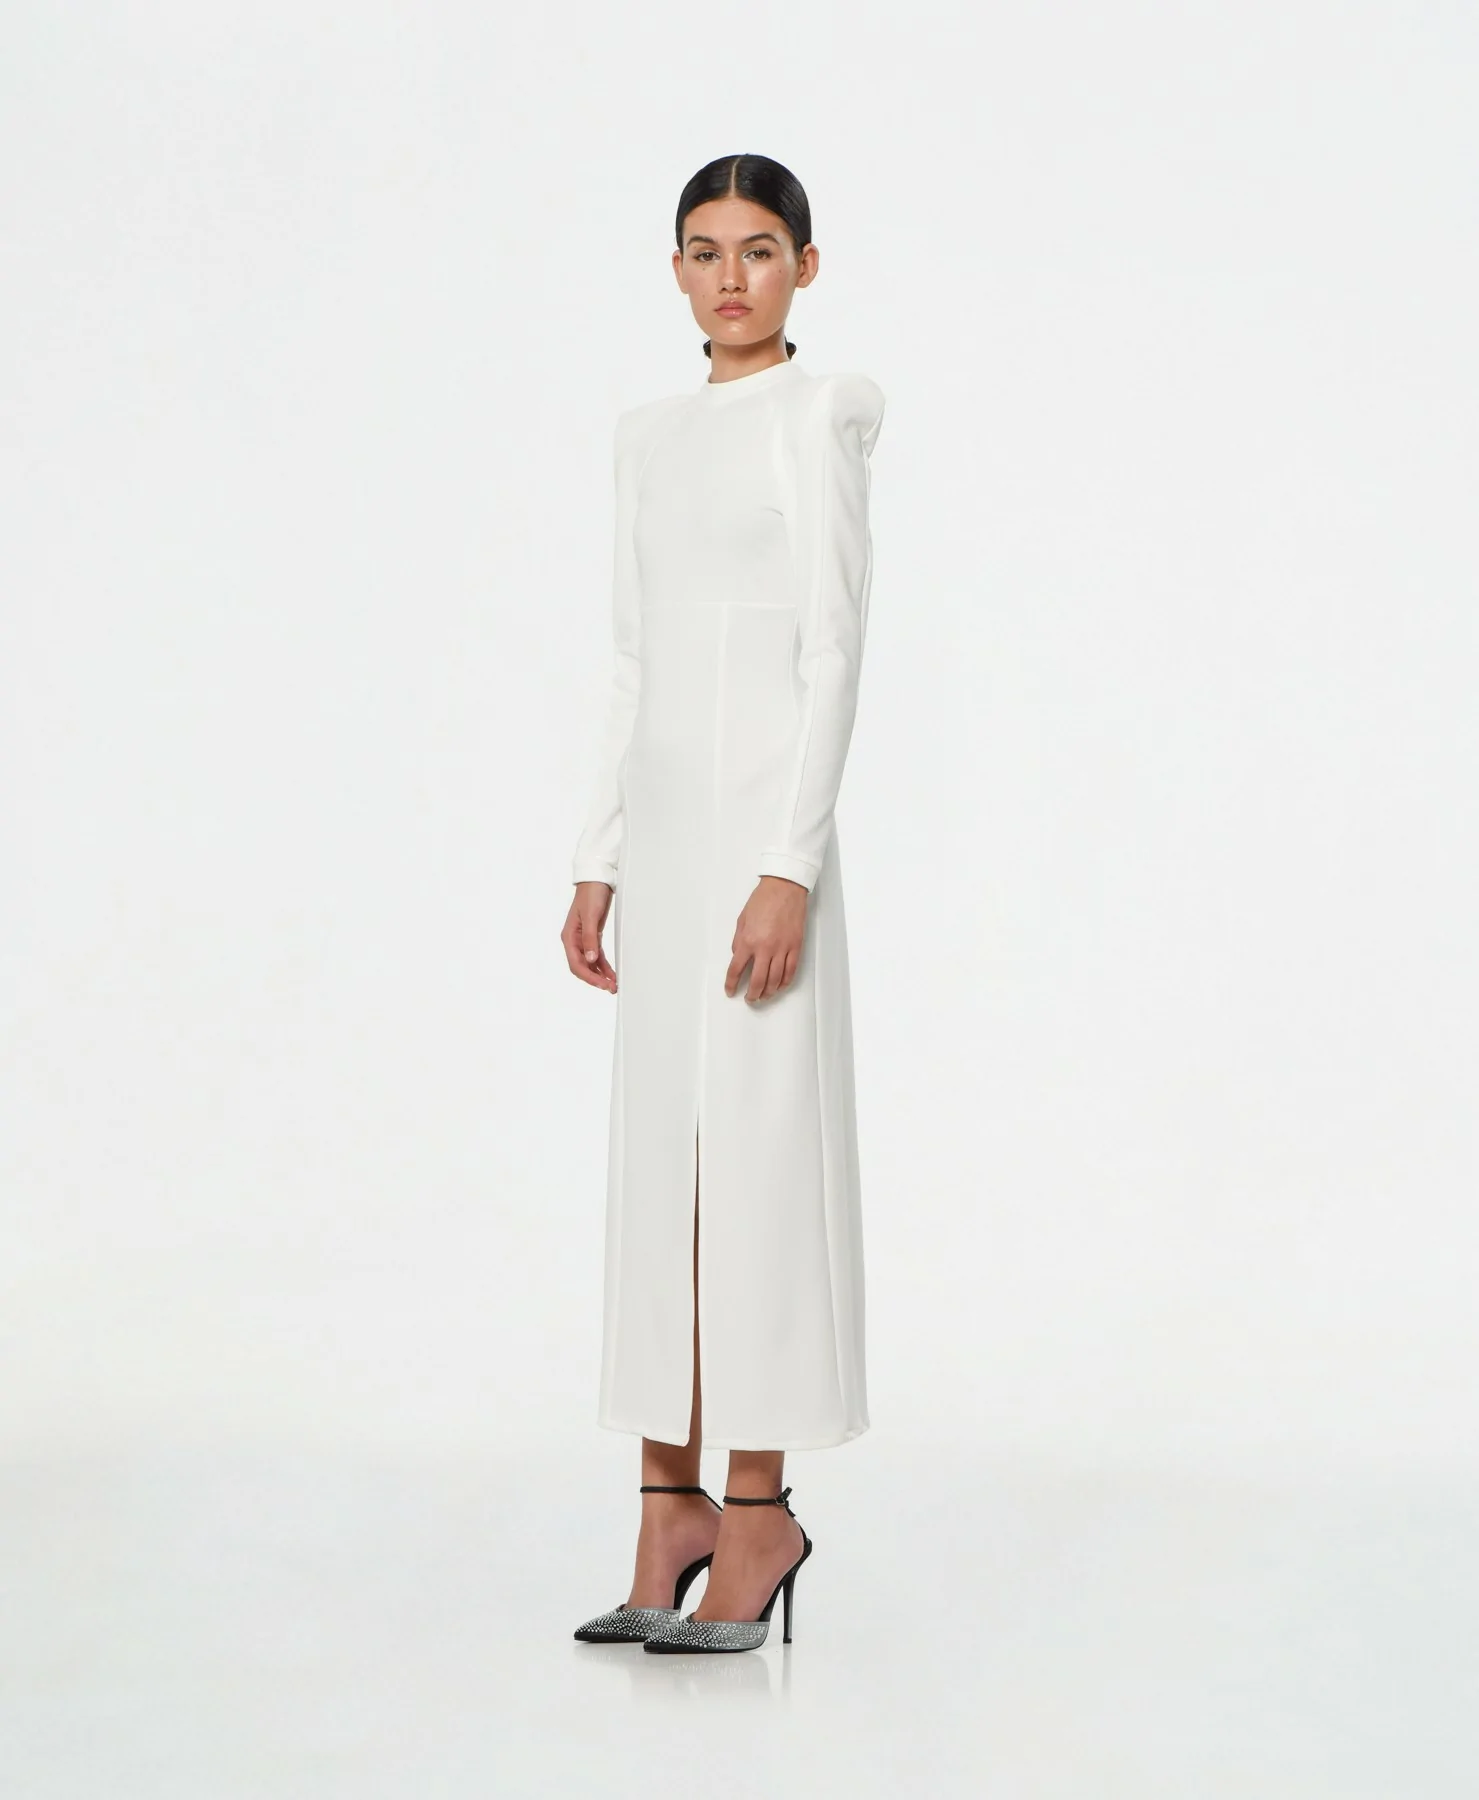 Norotu White Dress by NEW CLARO